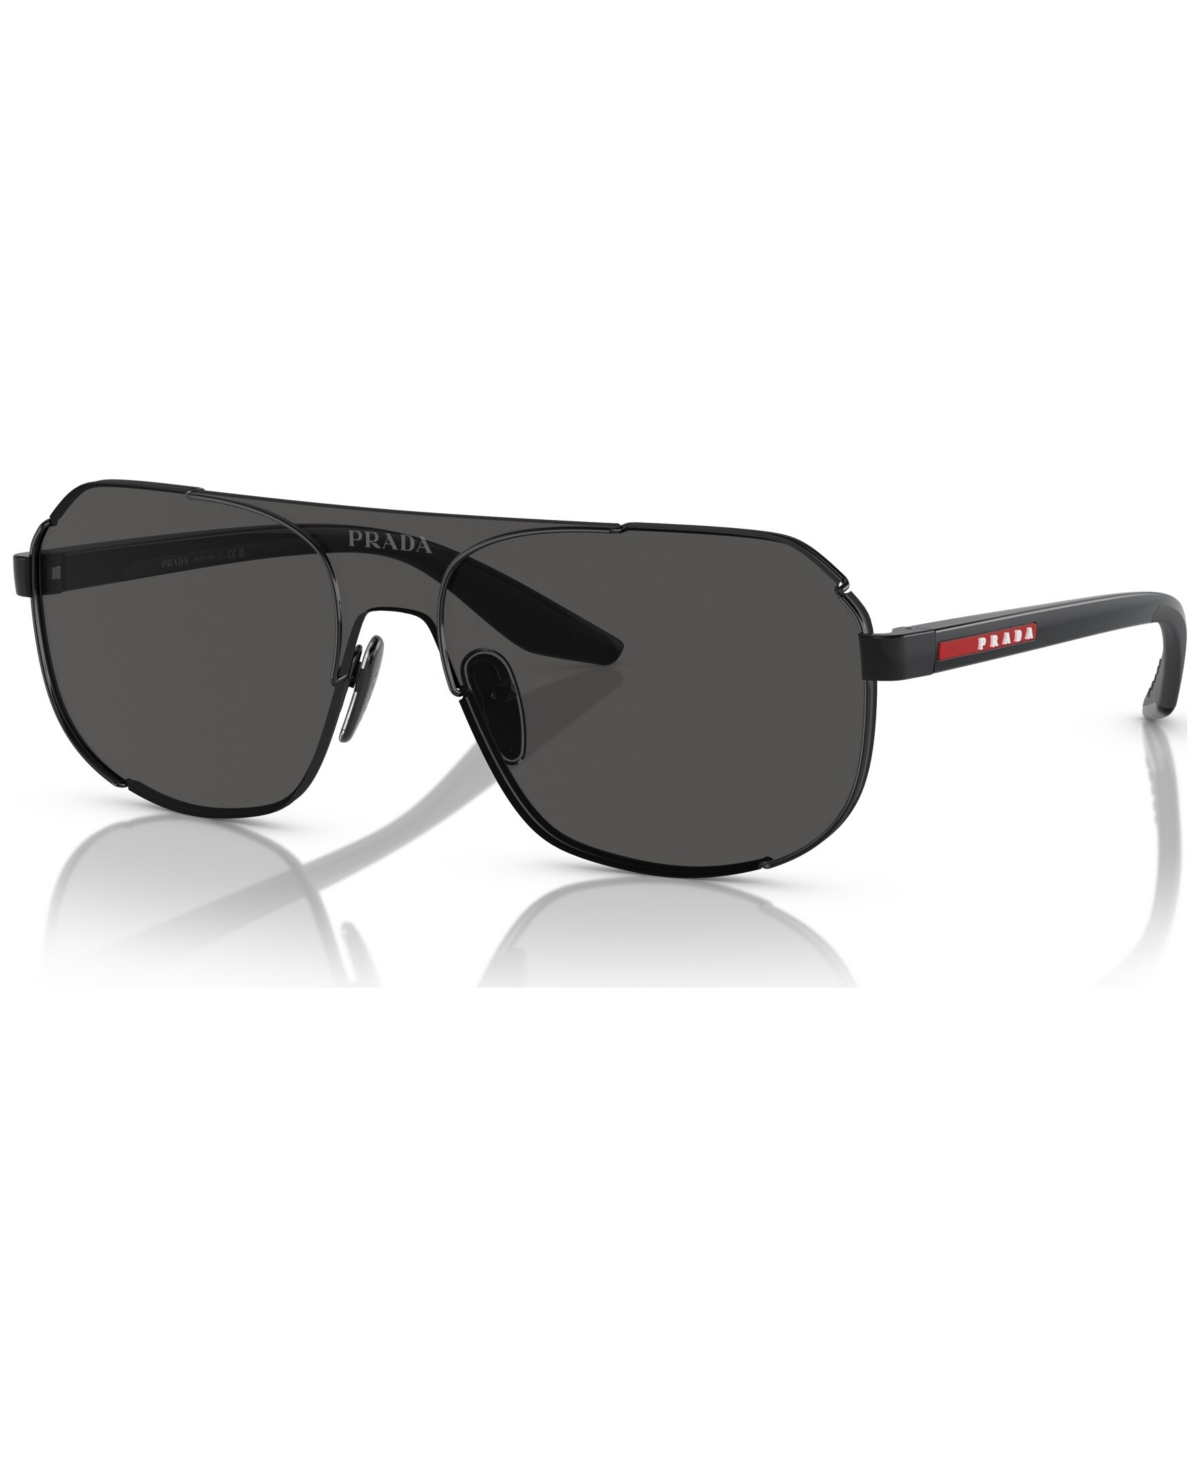 Prada Men's Sunglasses, Ps 53ys In Black